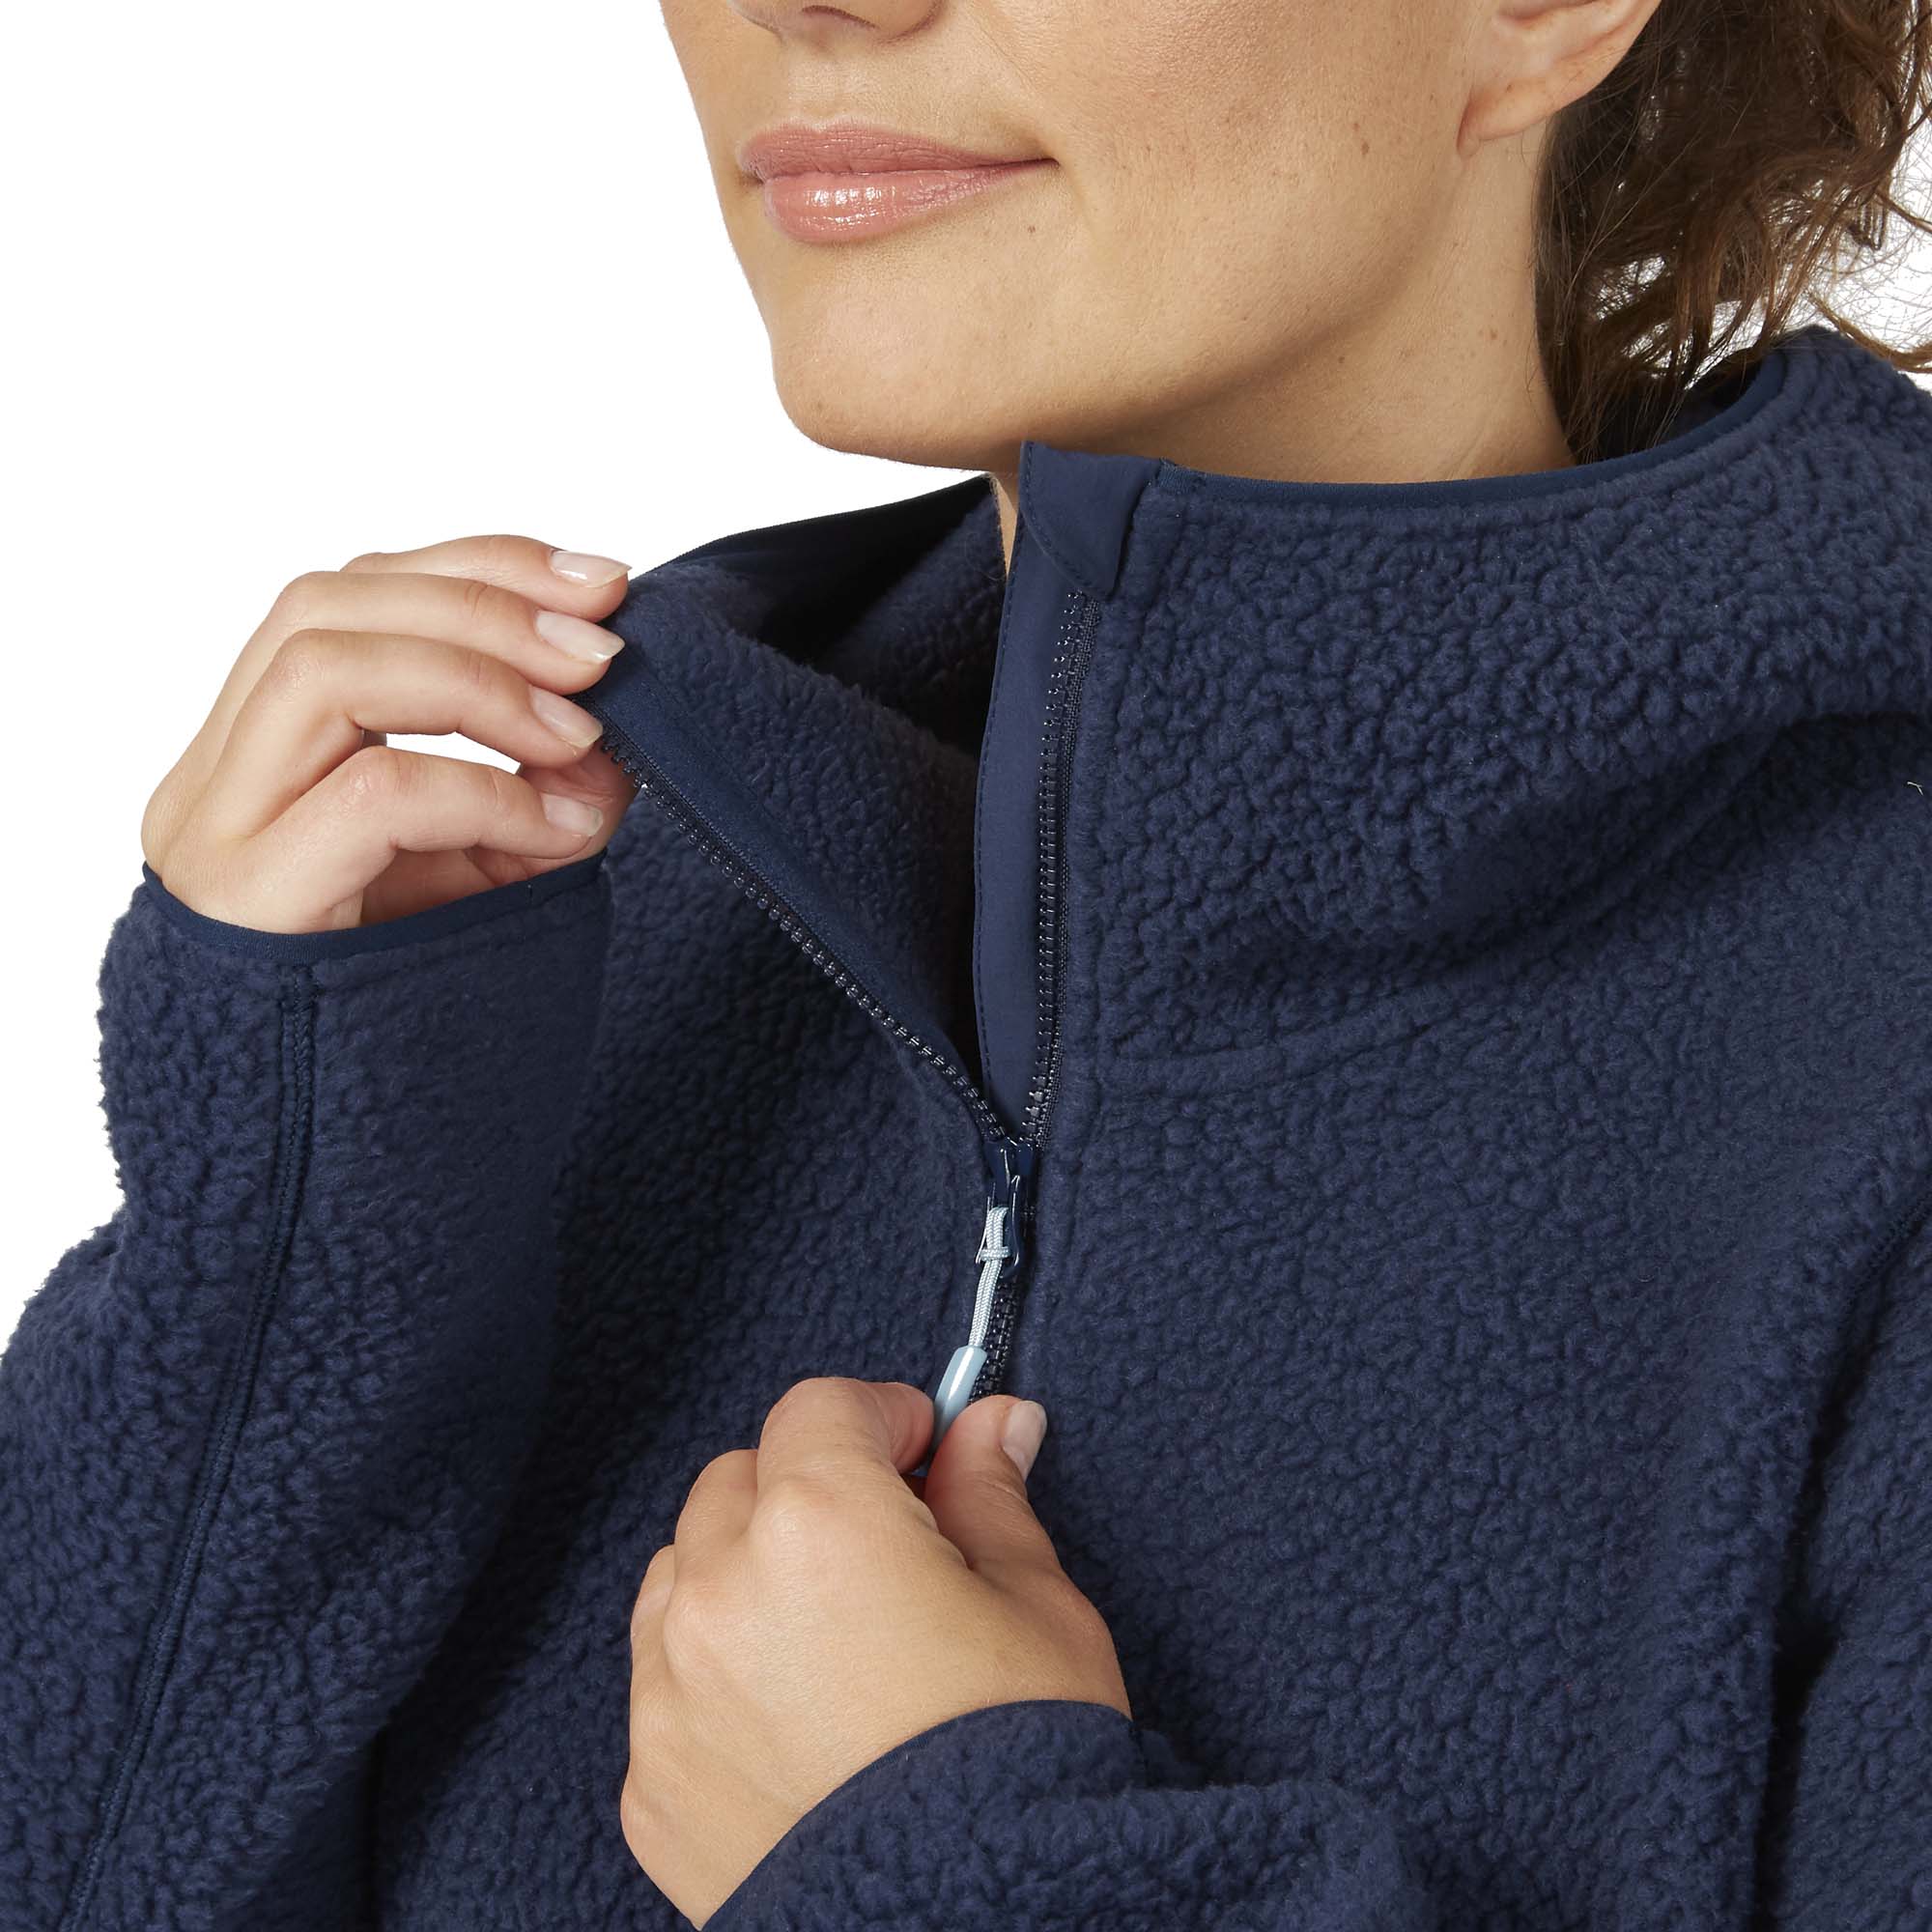 Rab Shearling Hoody Women's Full Zip Fleece Jacket